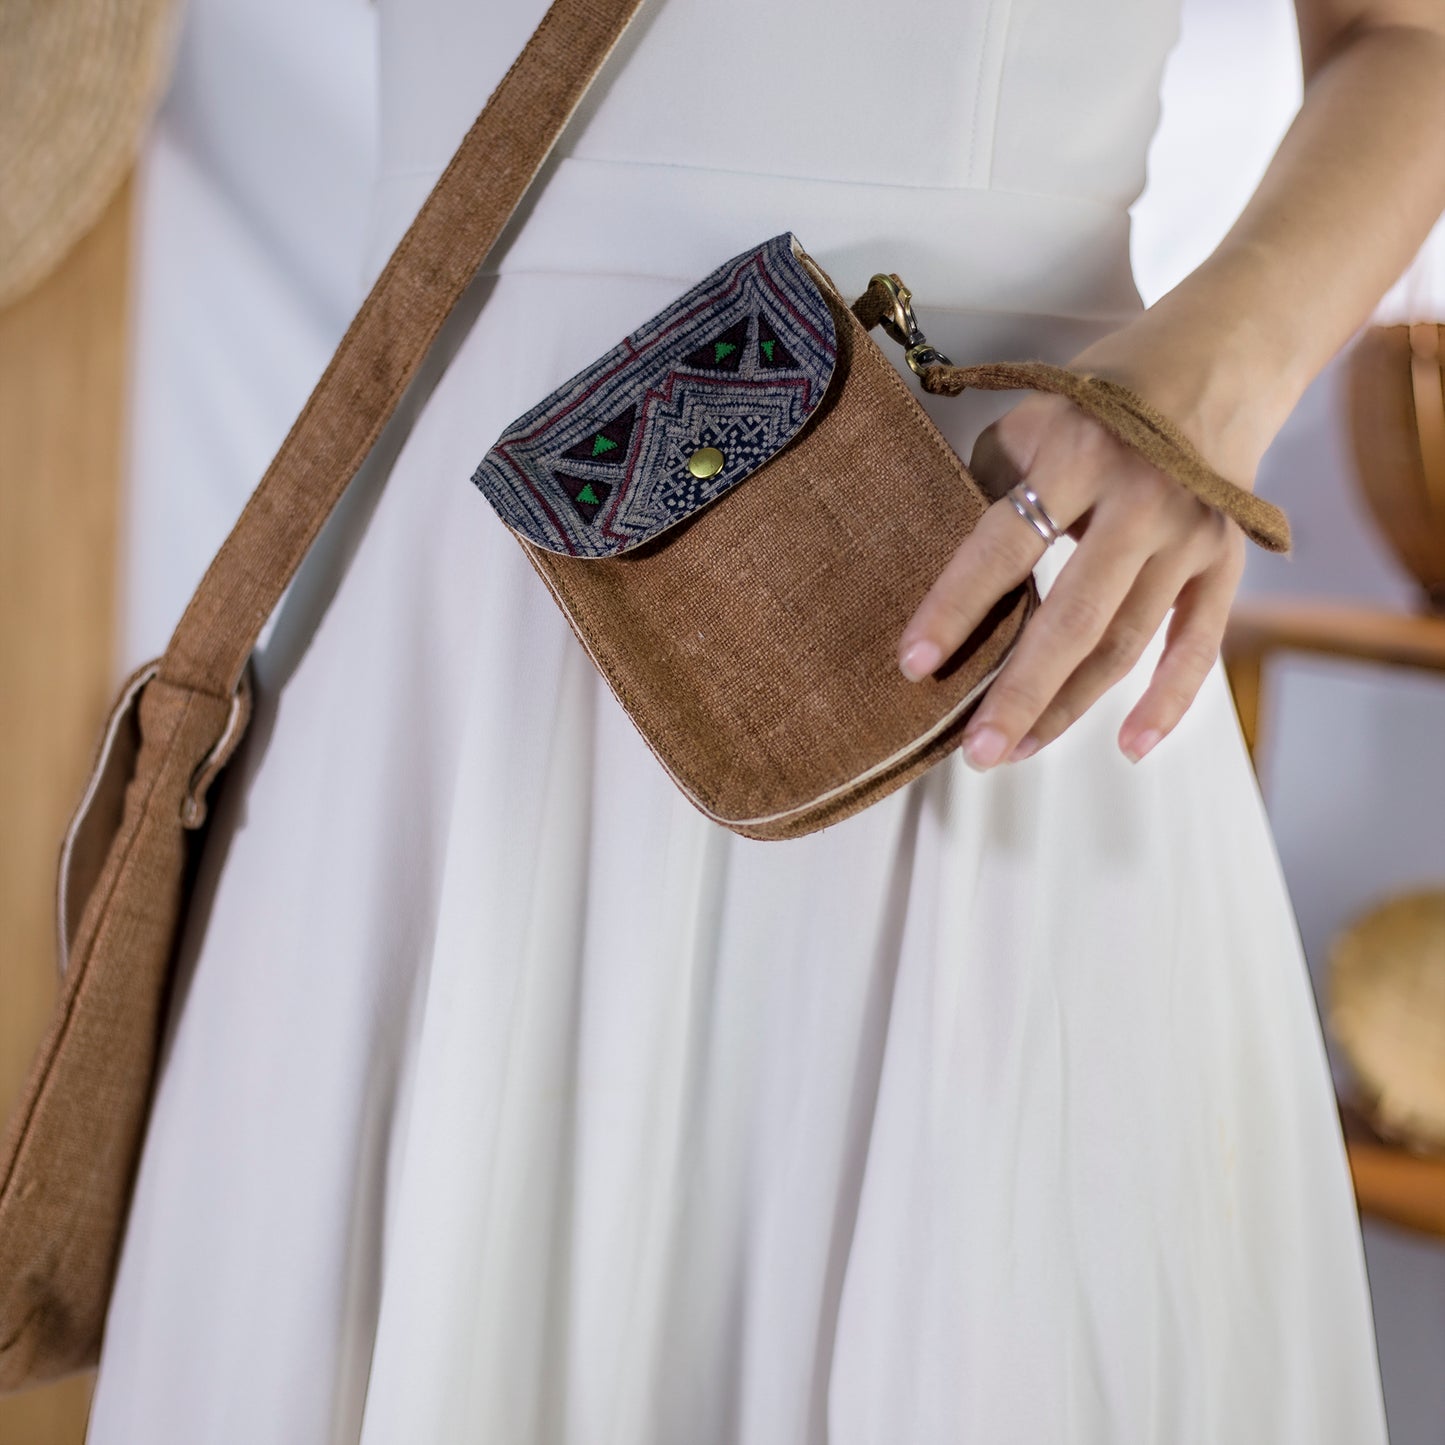 Flip phone belt bag, wrist bag option, natural hemp in BROWN color